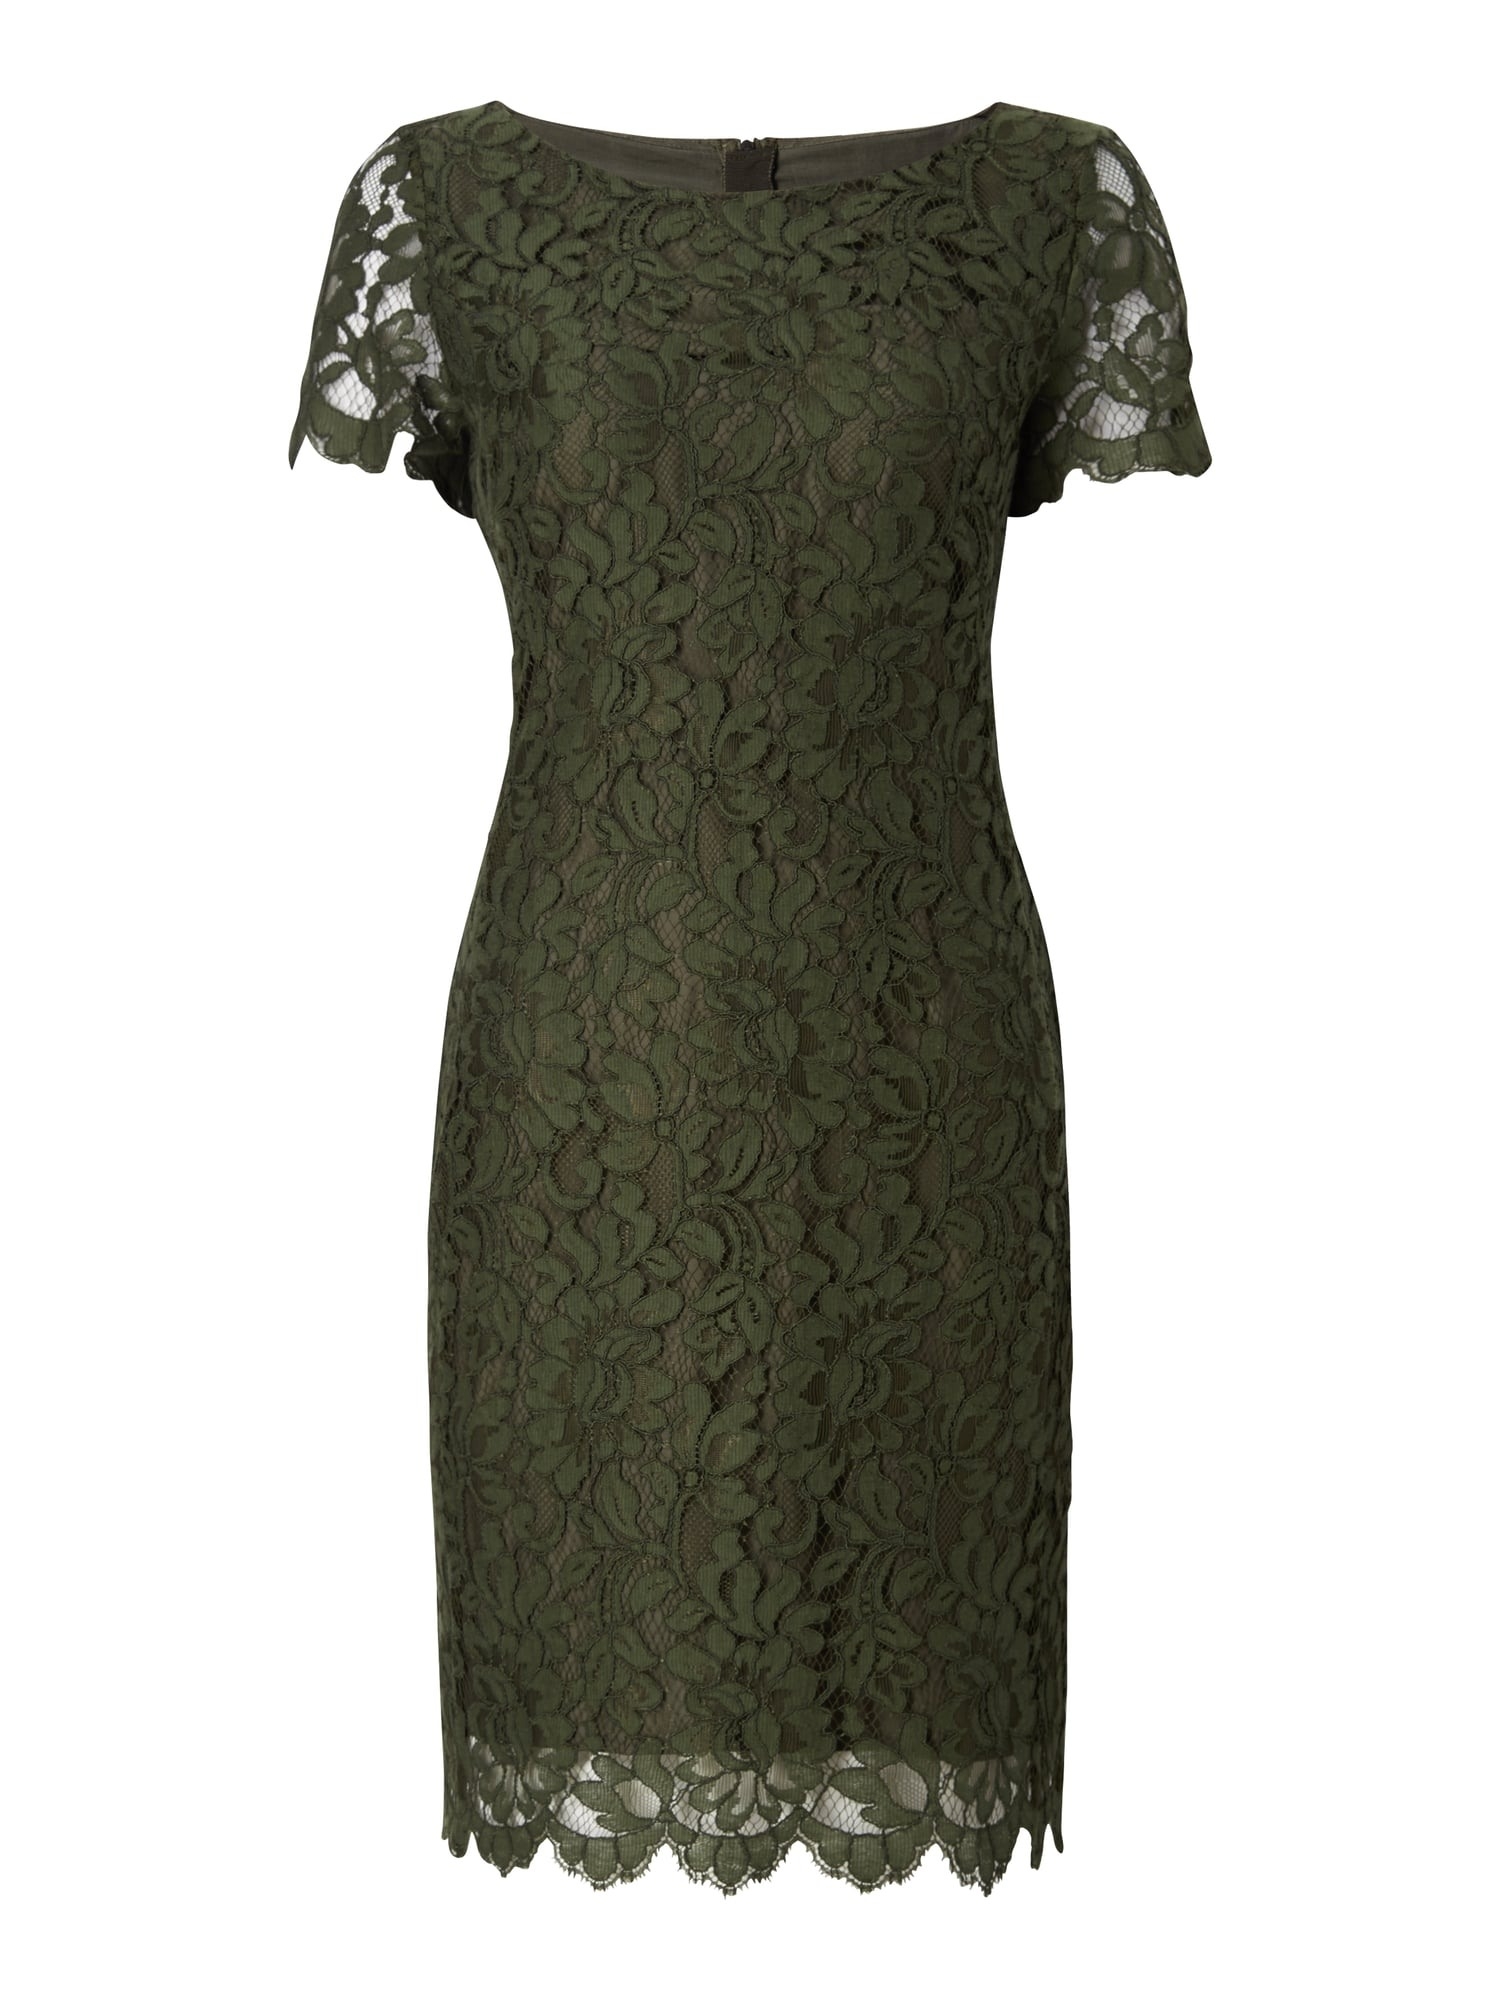 Designer Elegant Kleid Olivgrün BoutiqueDesigner Wunderbar Kleid Olivgrün Spezialgebiet